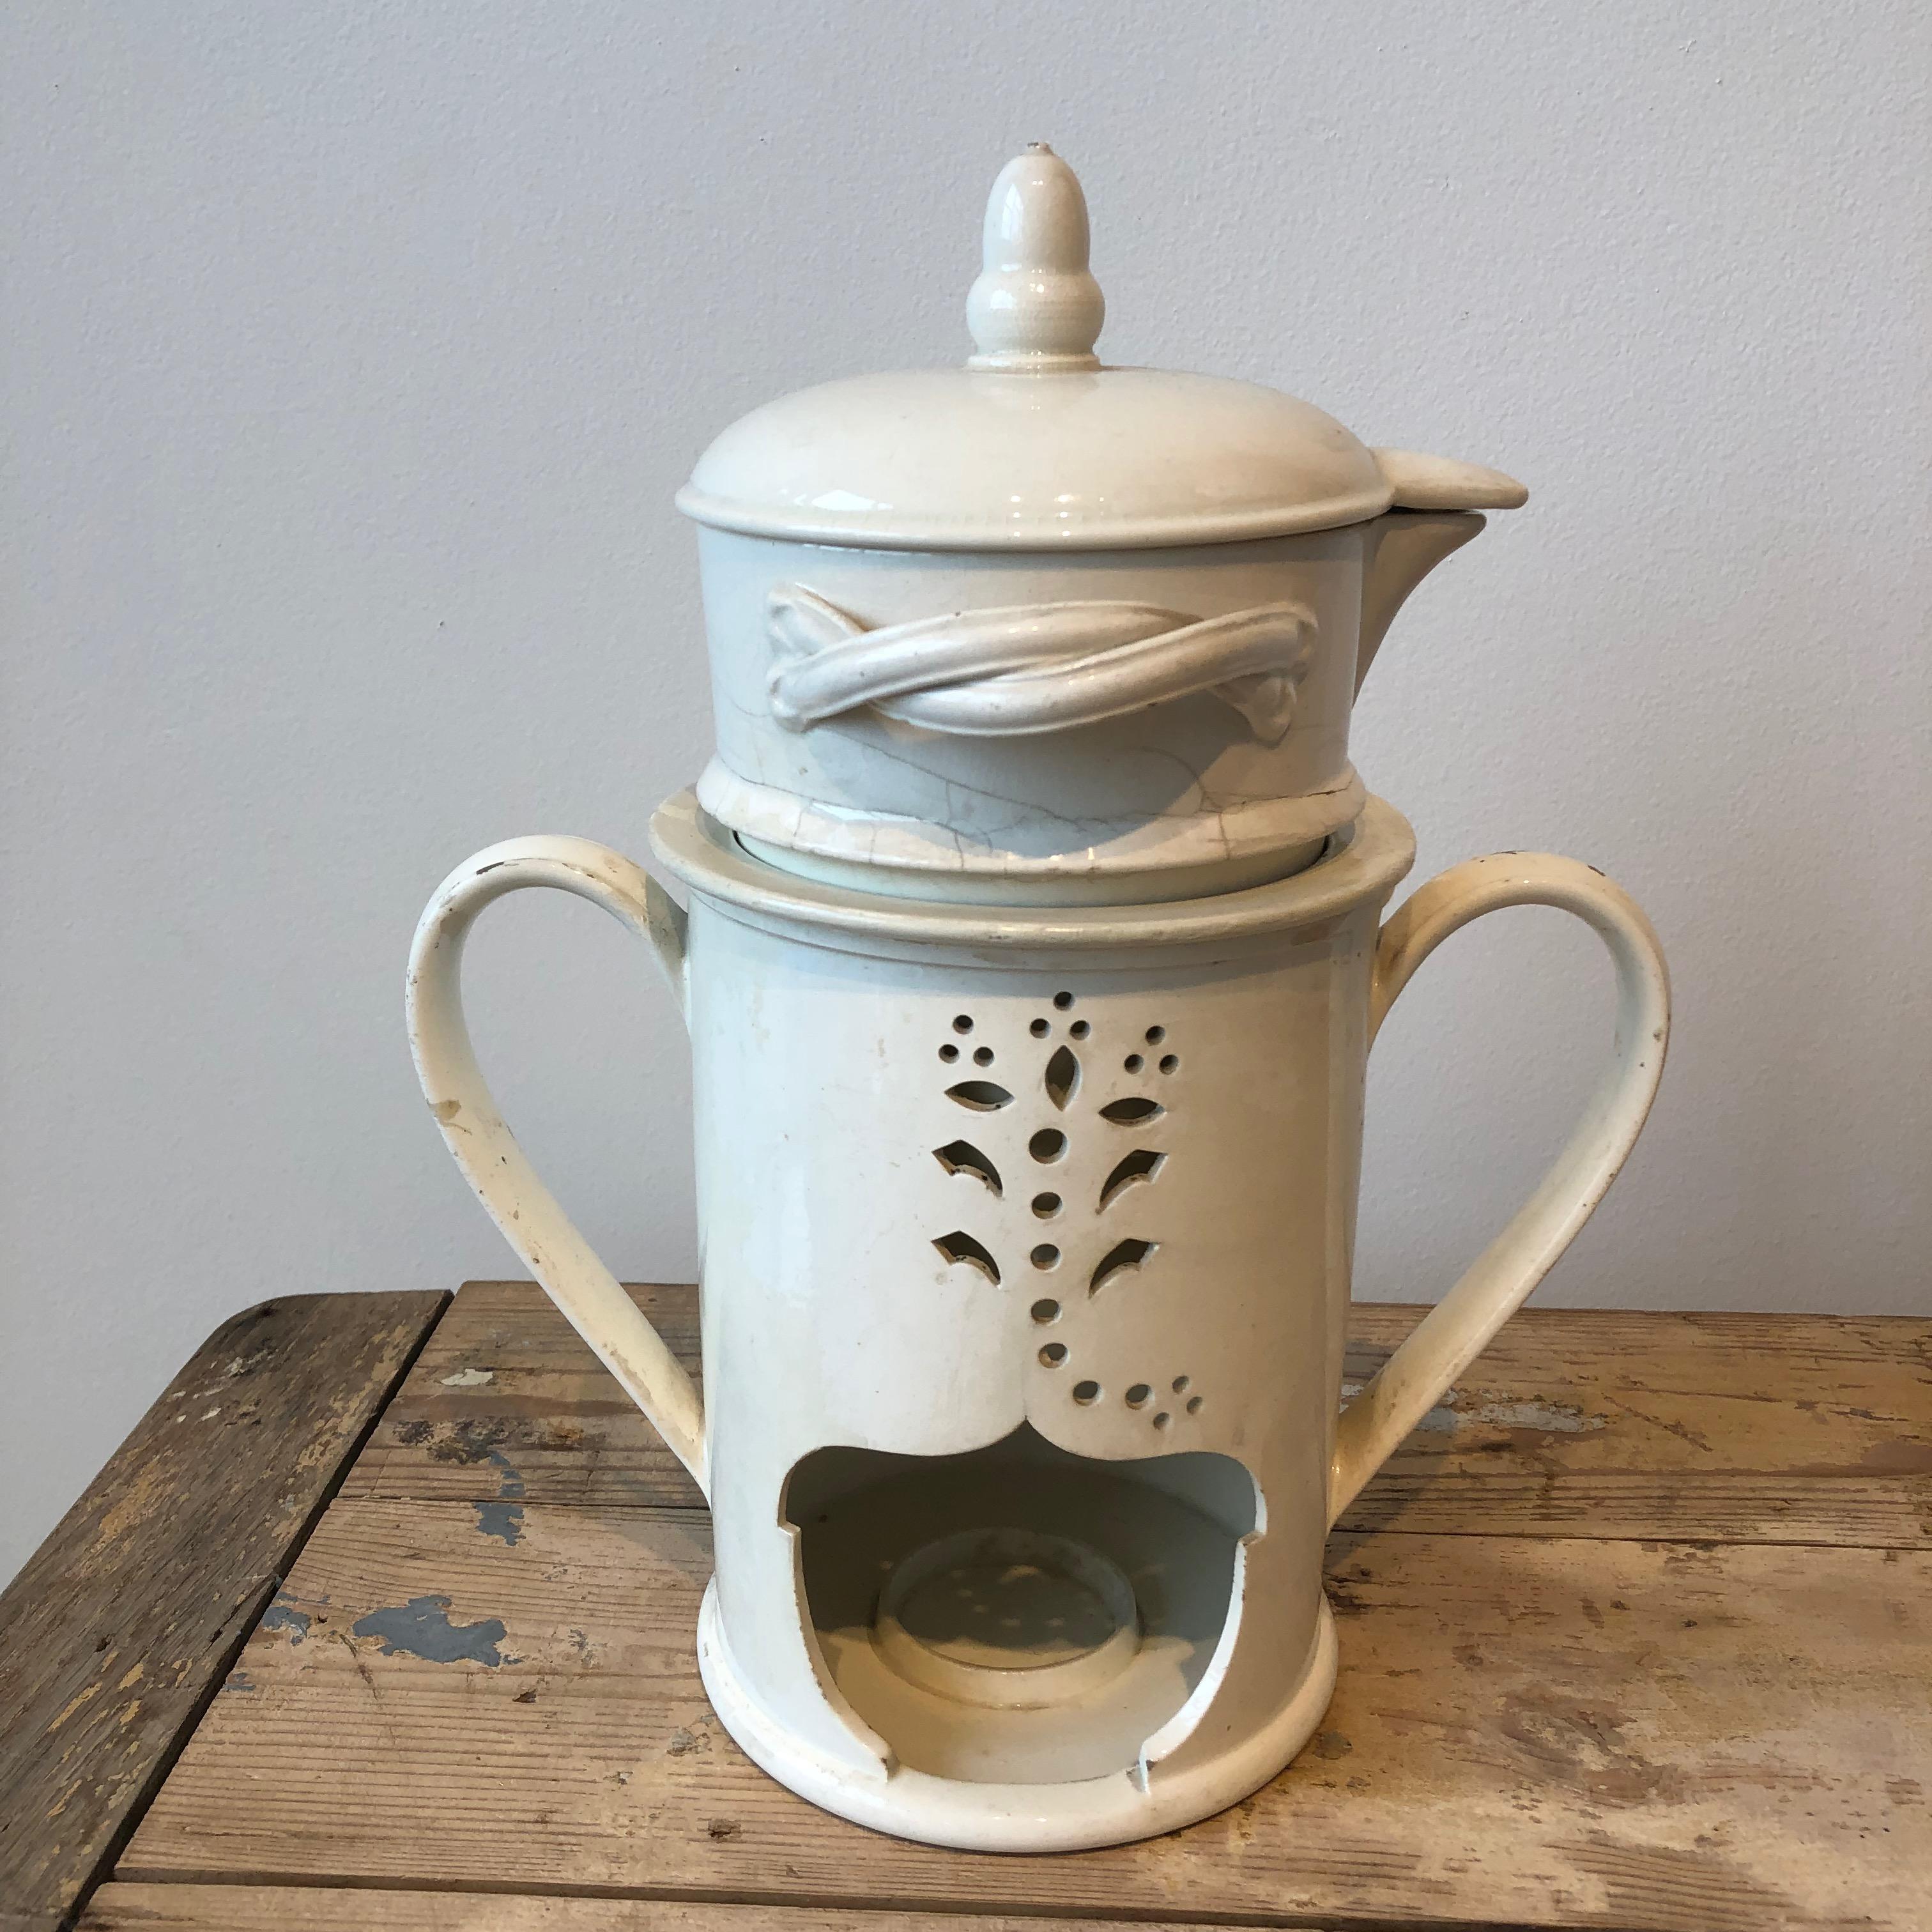 19th century English Wedgwood Creamware pot and warmer, circa 1817.